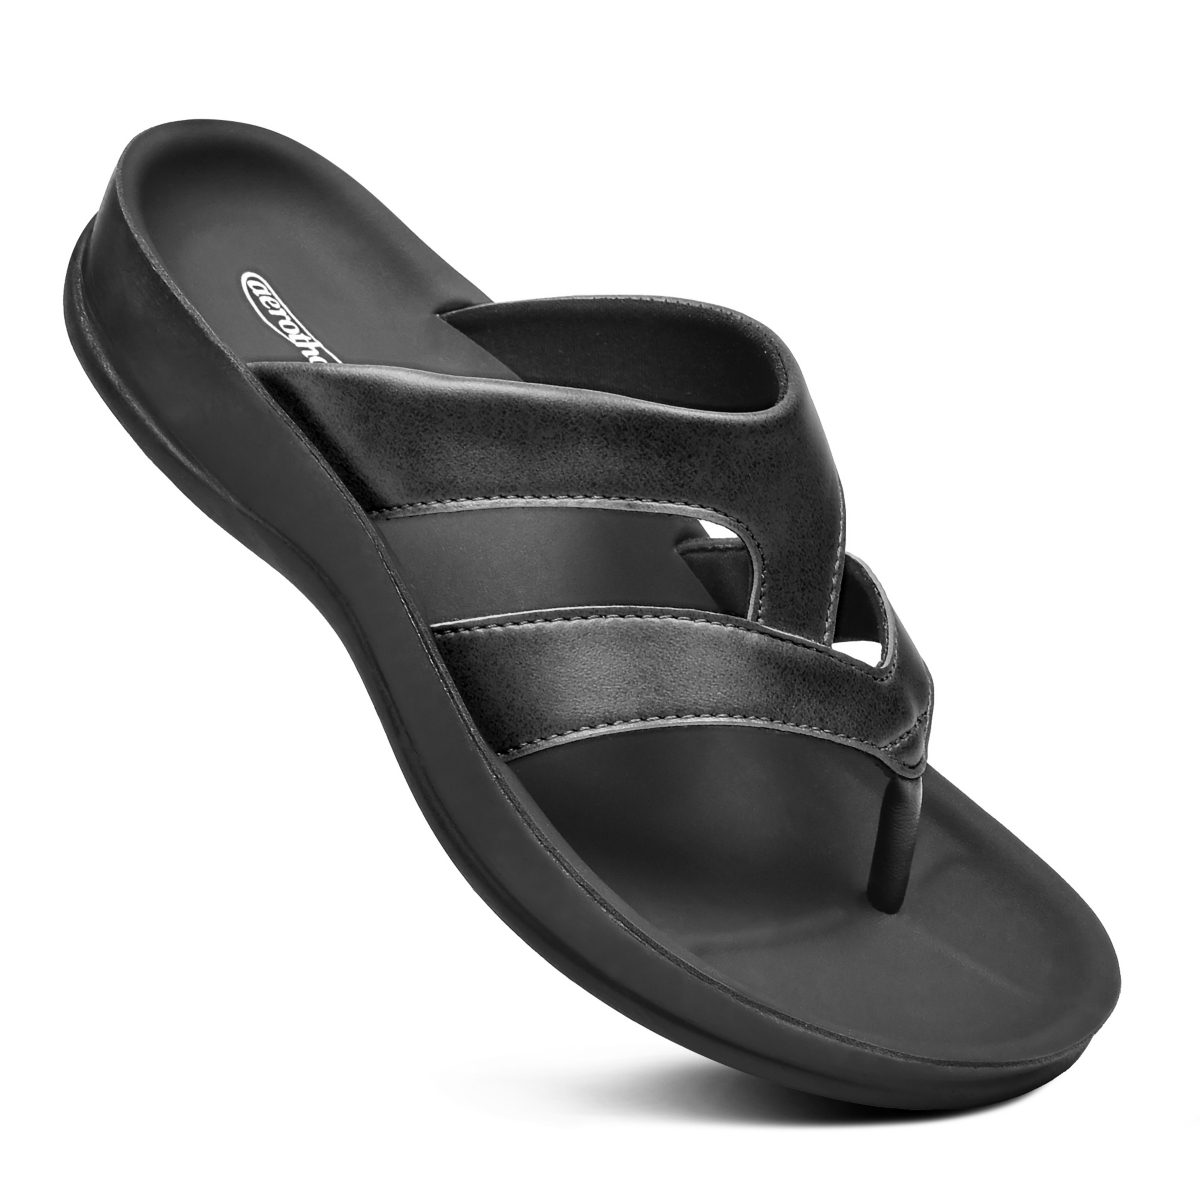 Women's Sandals Raido - Tan